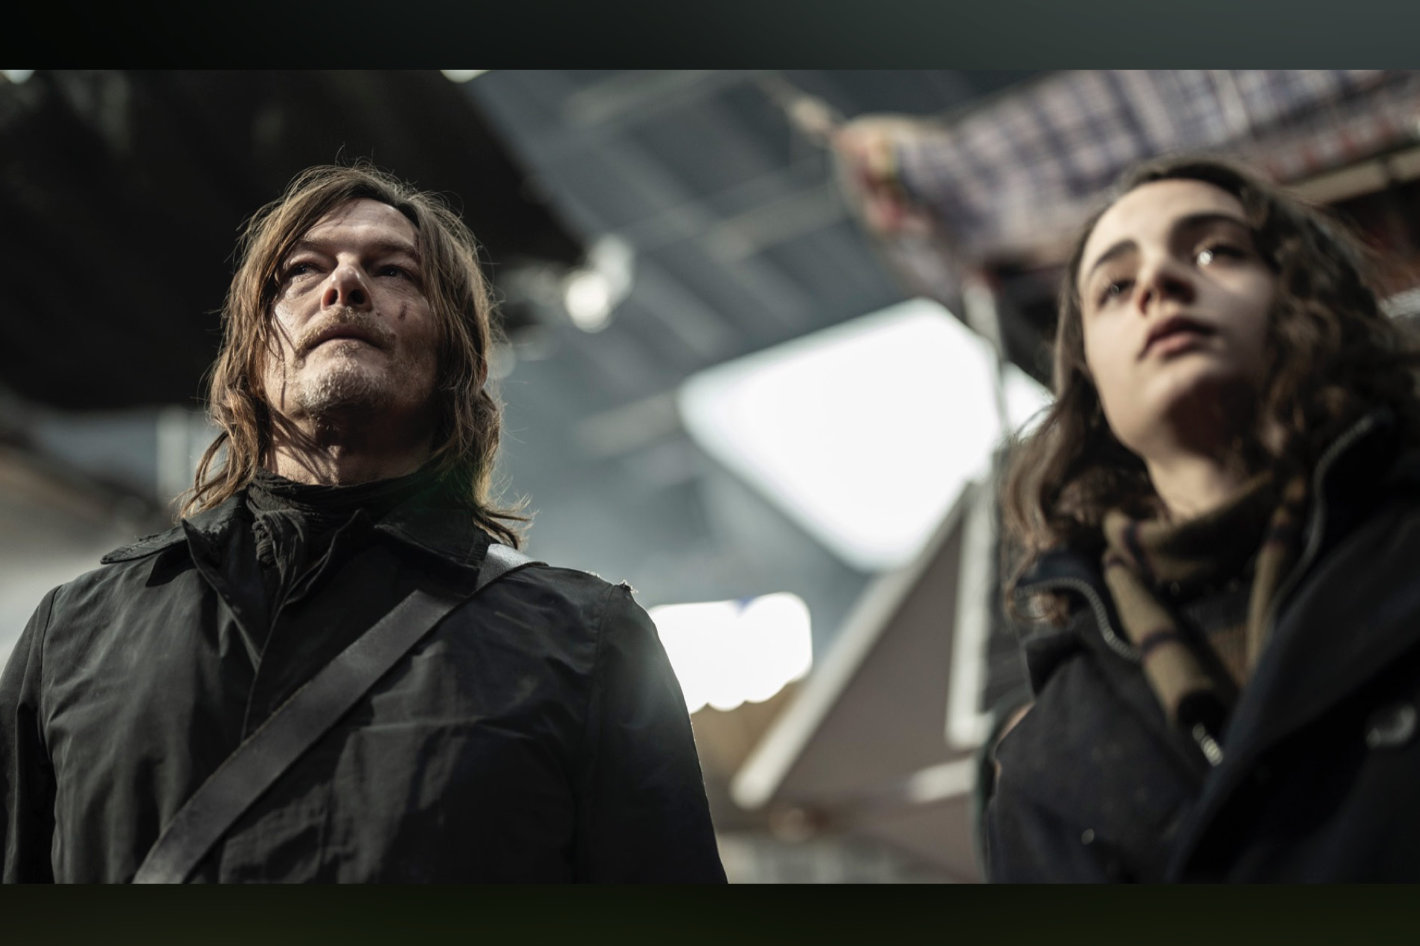 New “The Walking Dead” spinoff graded in DaVinci Resolve Studio